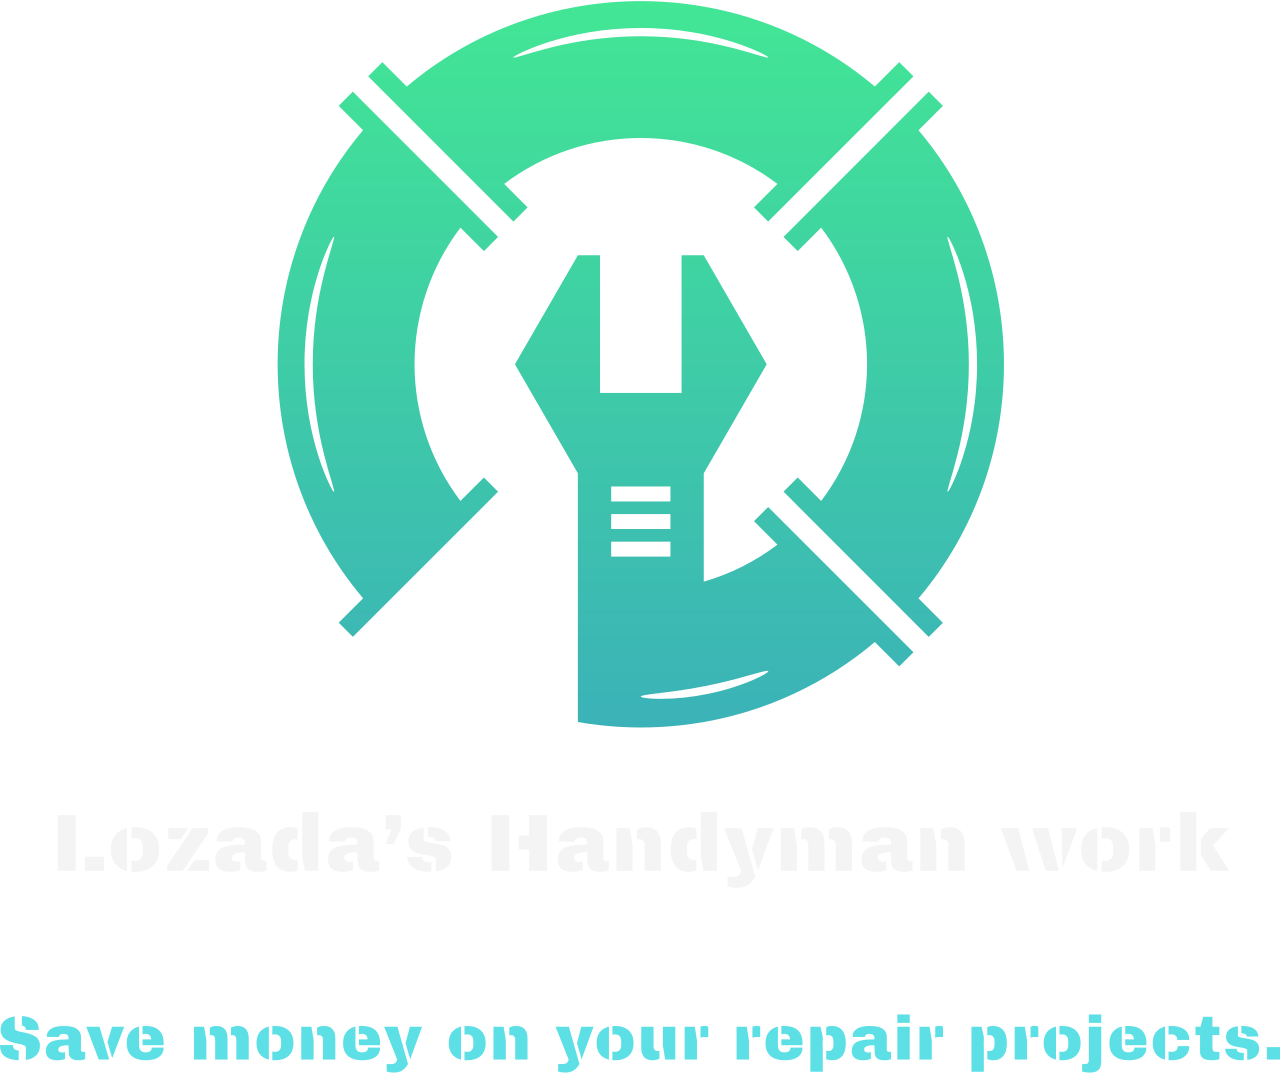 Lozada’s Handyman work's web page